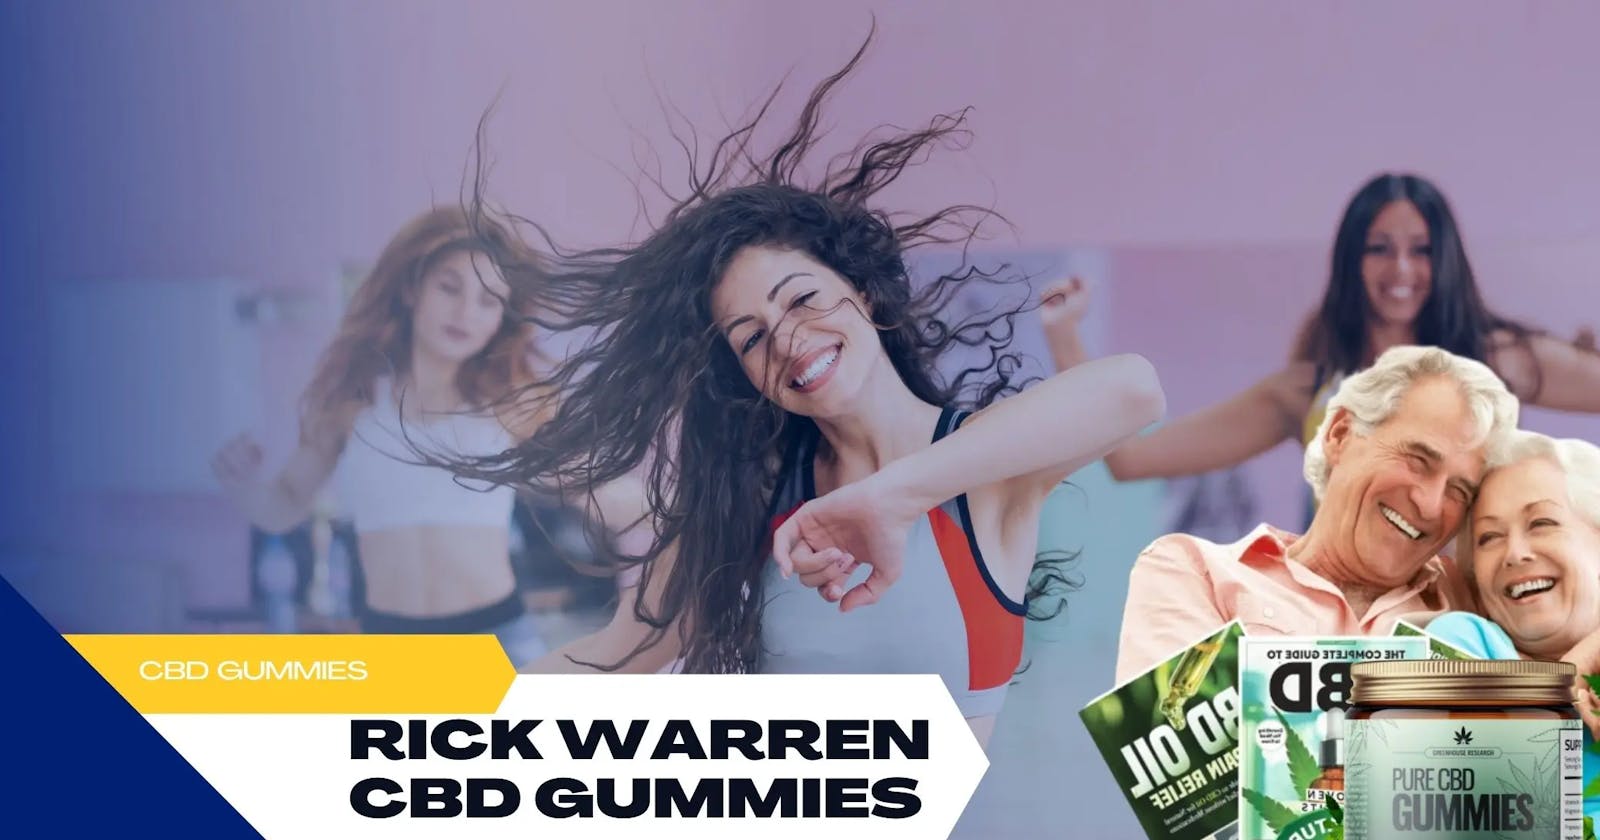 Rick Warren CBD Gummies Reviews, Results, Where To Buy?